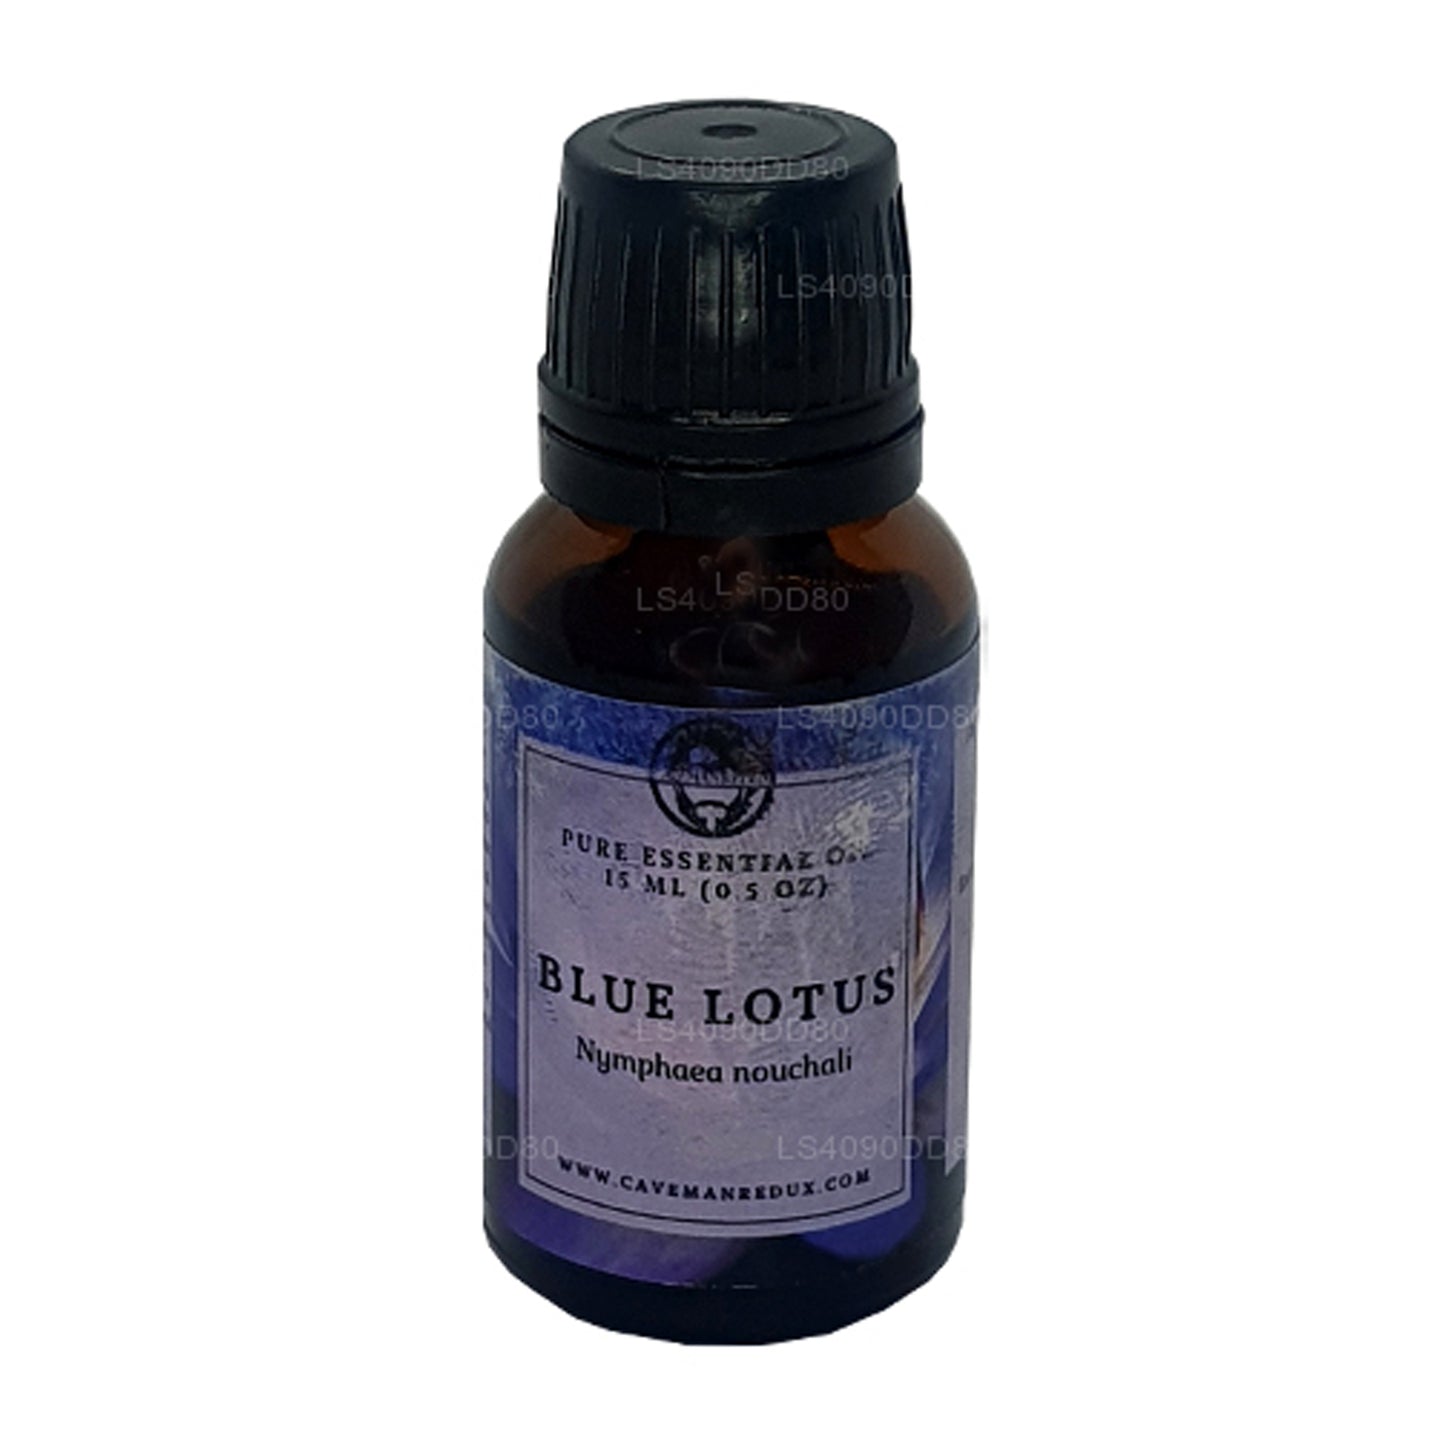 Huile essentielle de lotus bleu Lakpura (absolue) (15 ml)